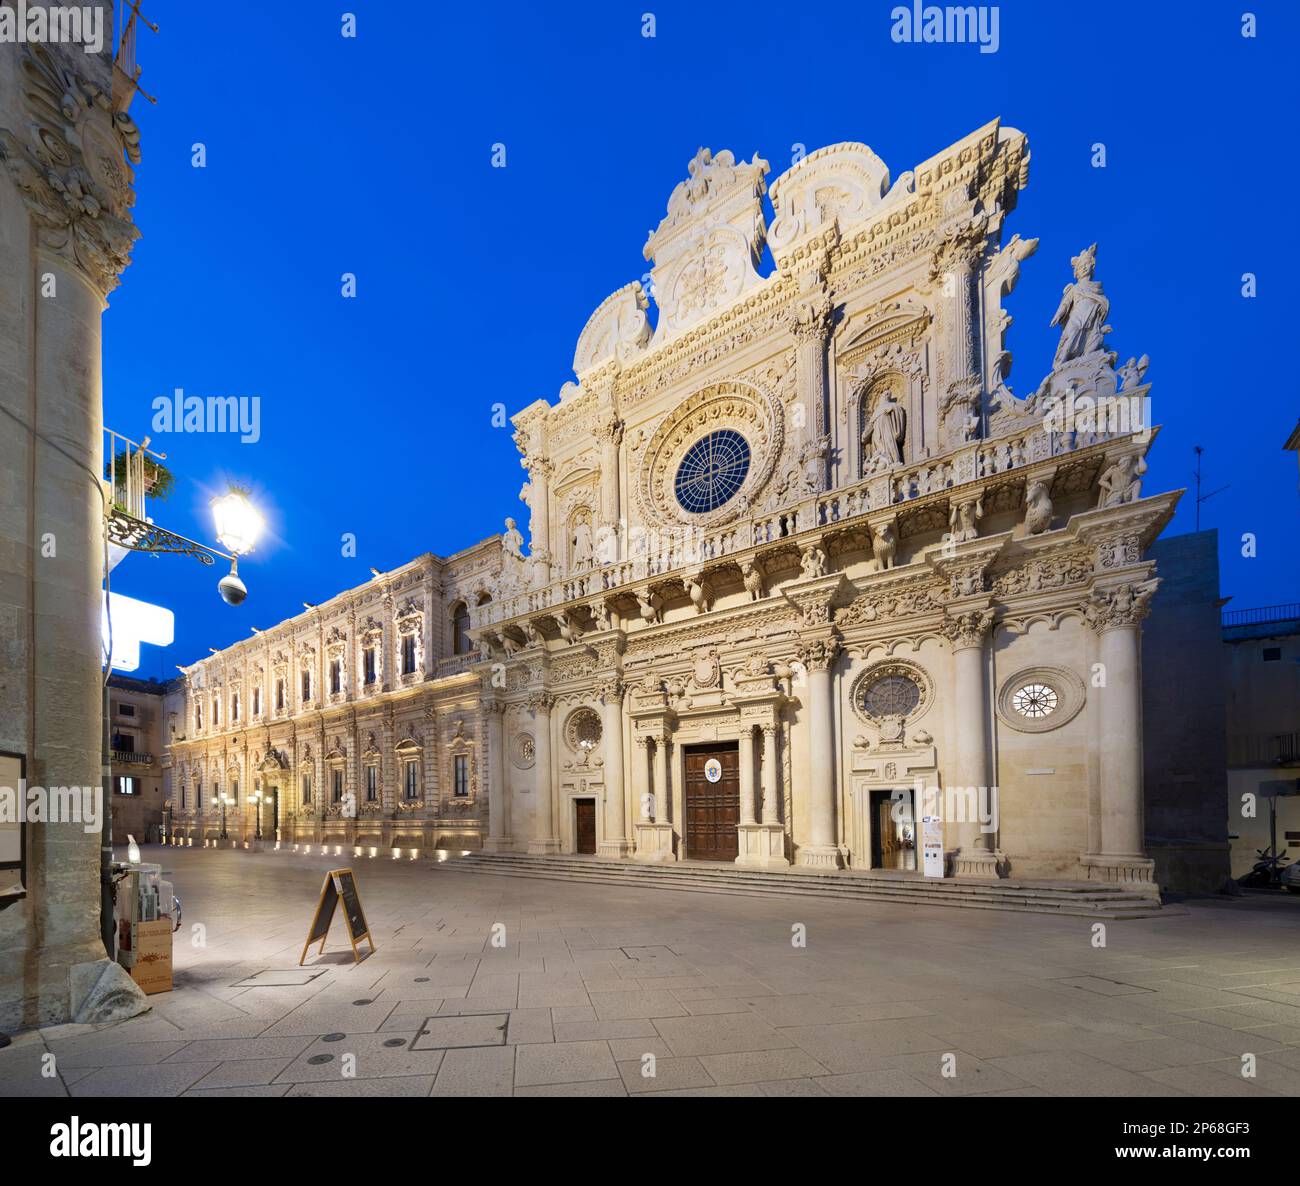 Façade baroque de la basilique de Santa Croce illuminée en soirée, Lecce, Puglia, Italie, Europe Banque D'Images